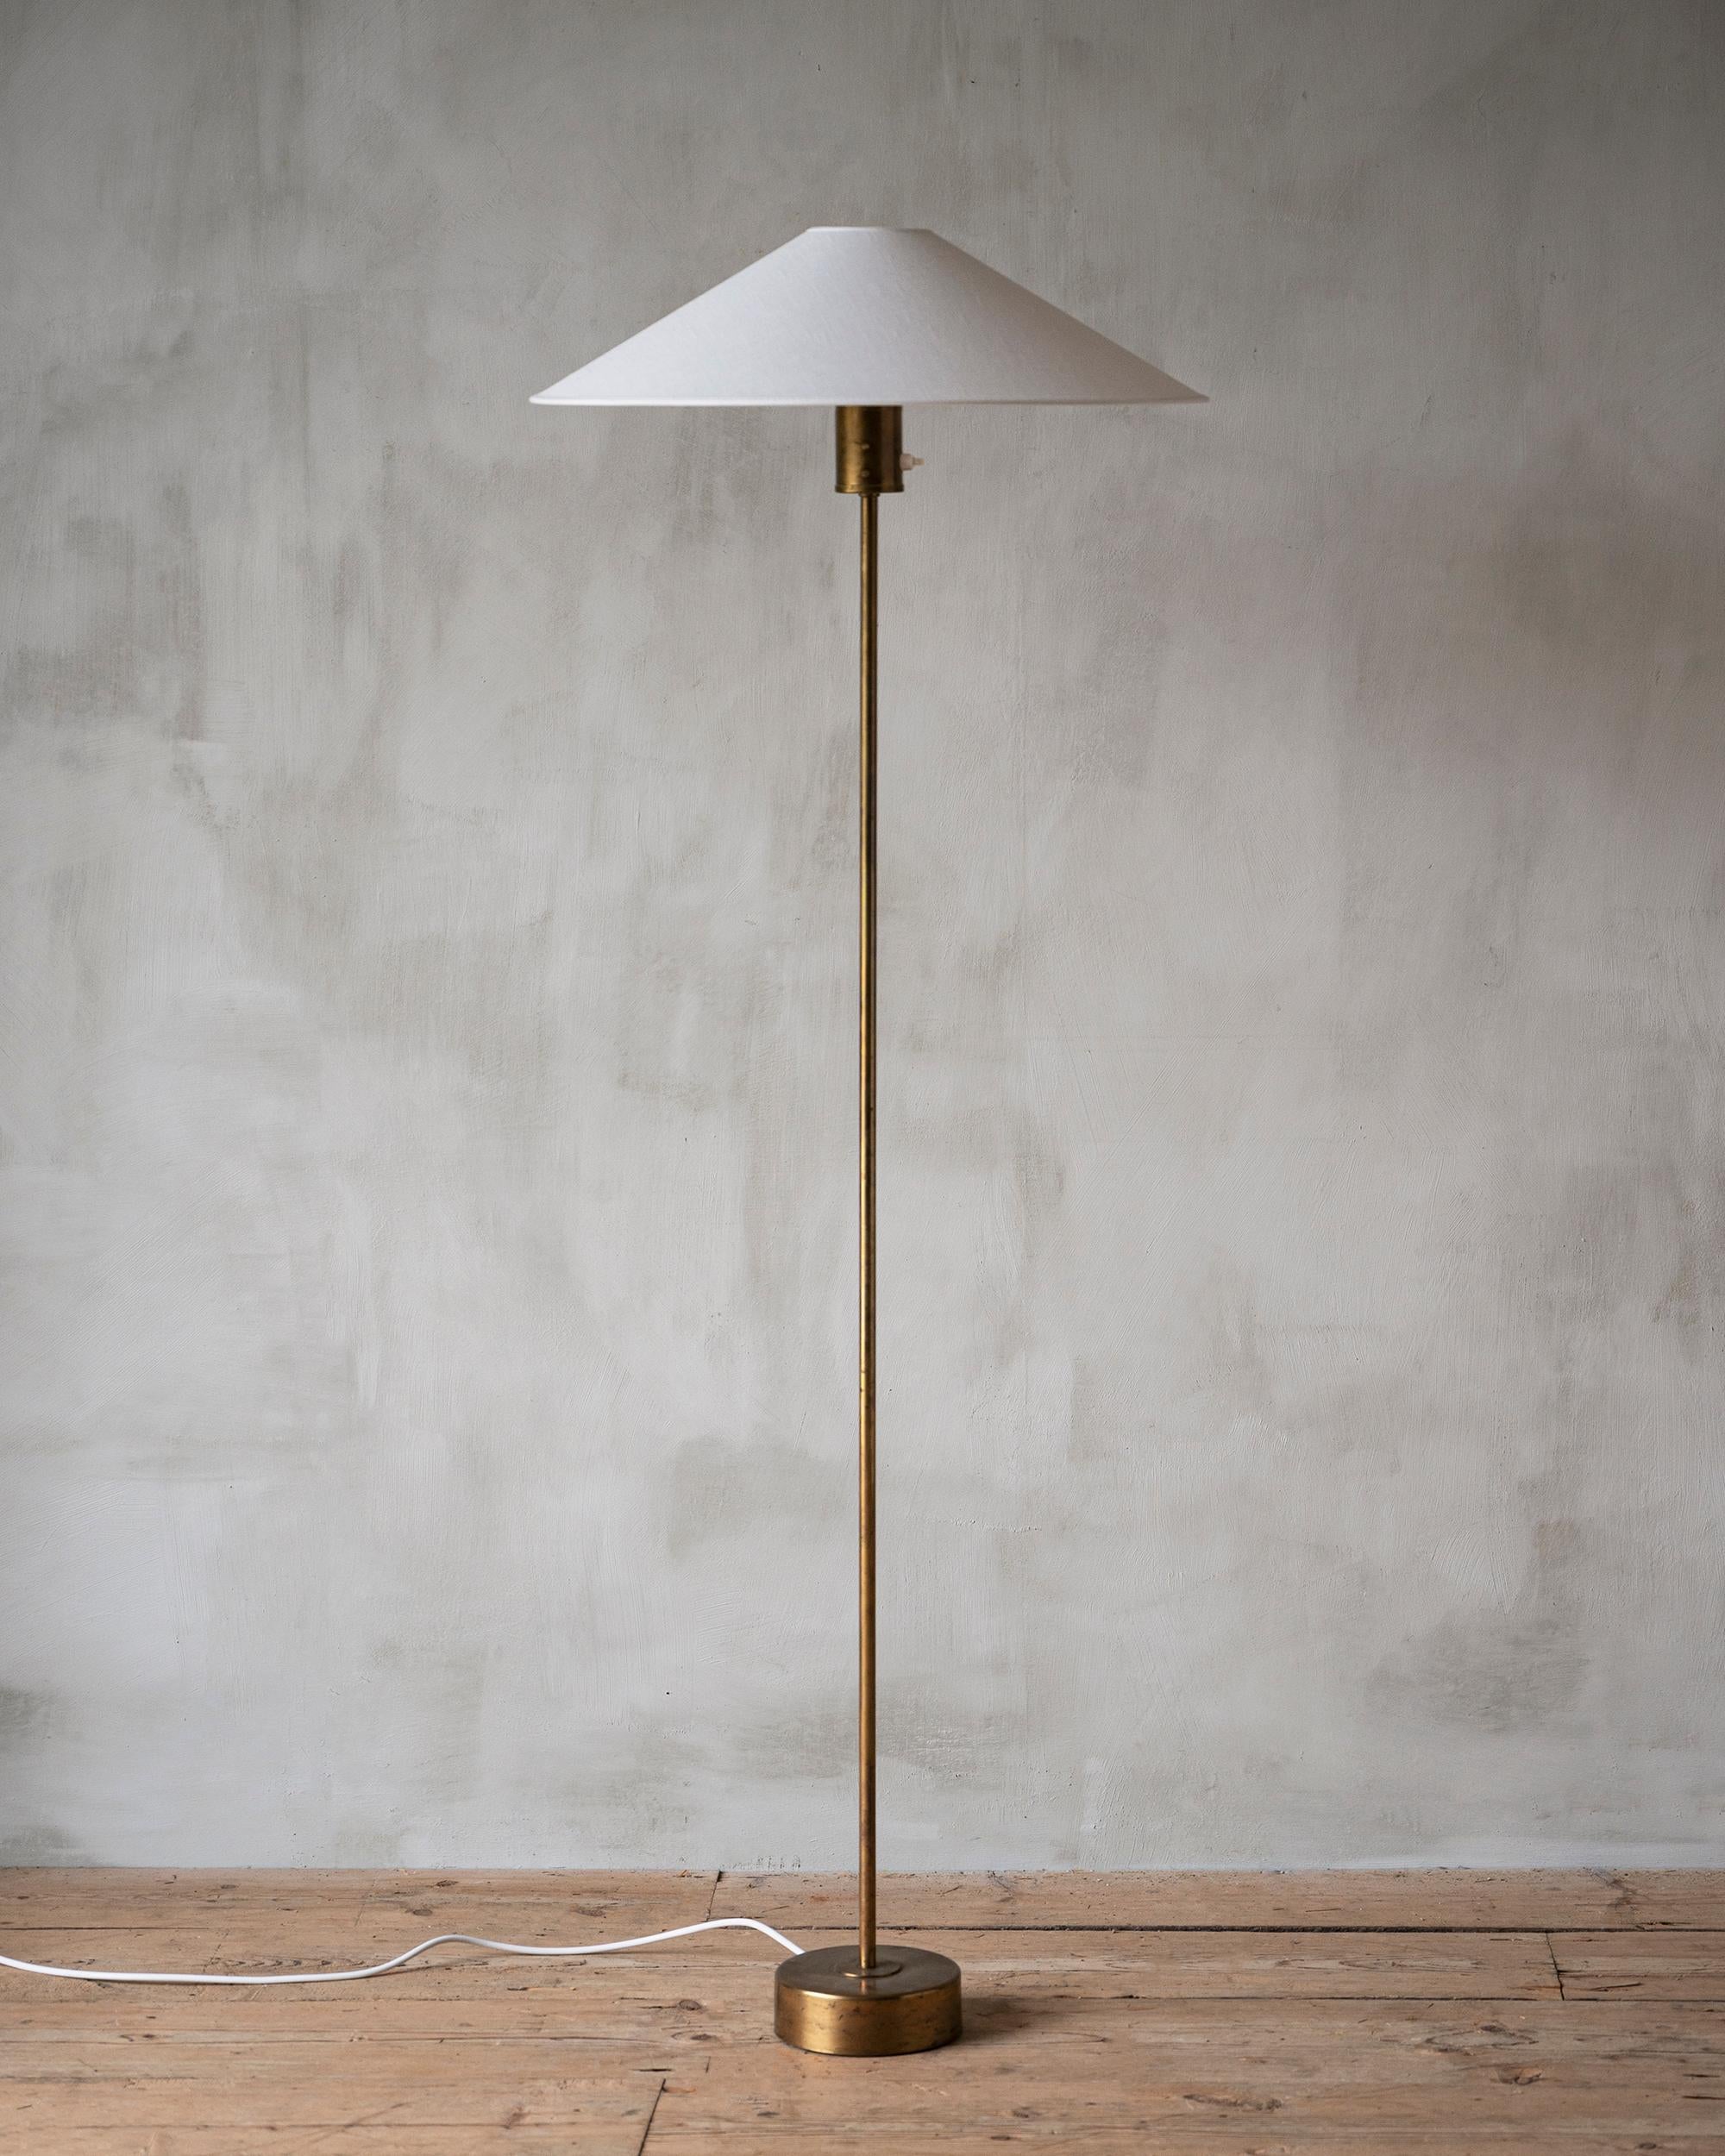 20th Century Mid Century Floor Lamp by Hans Bergström for Ateljé Lyktan 1940/50s For Sale